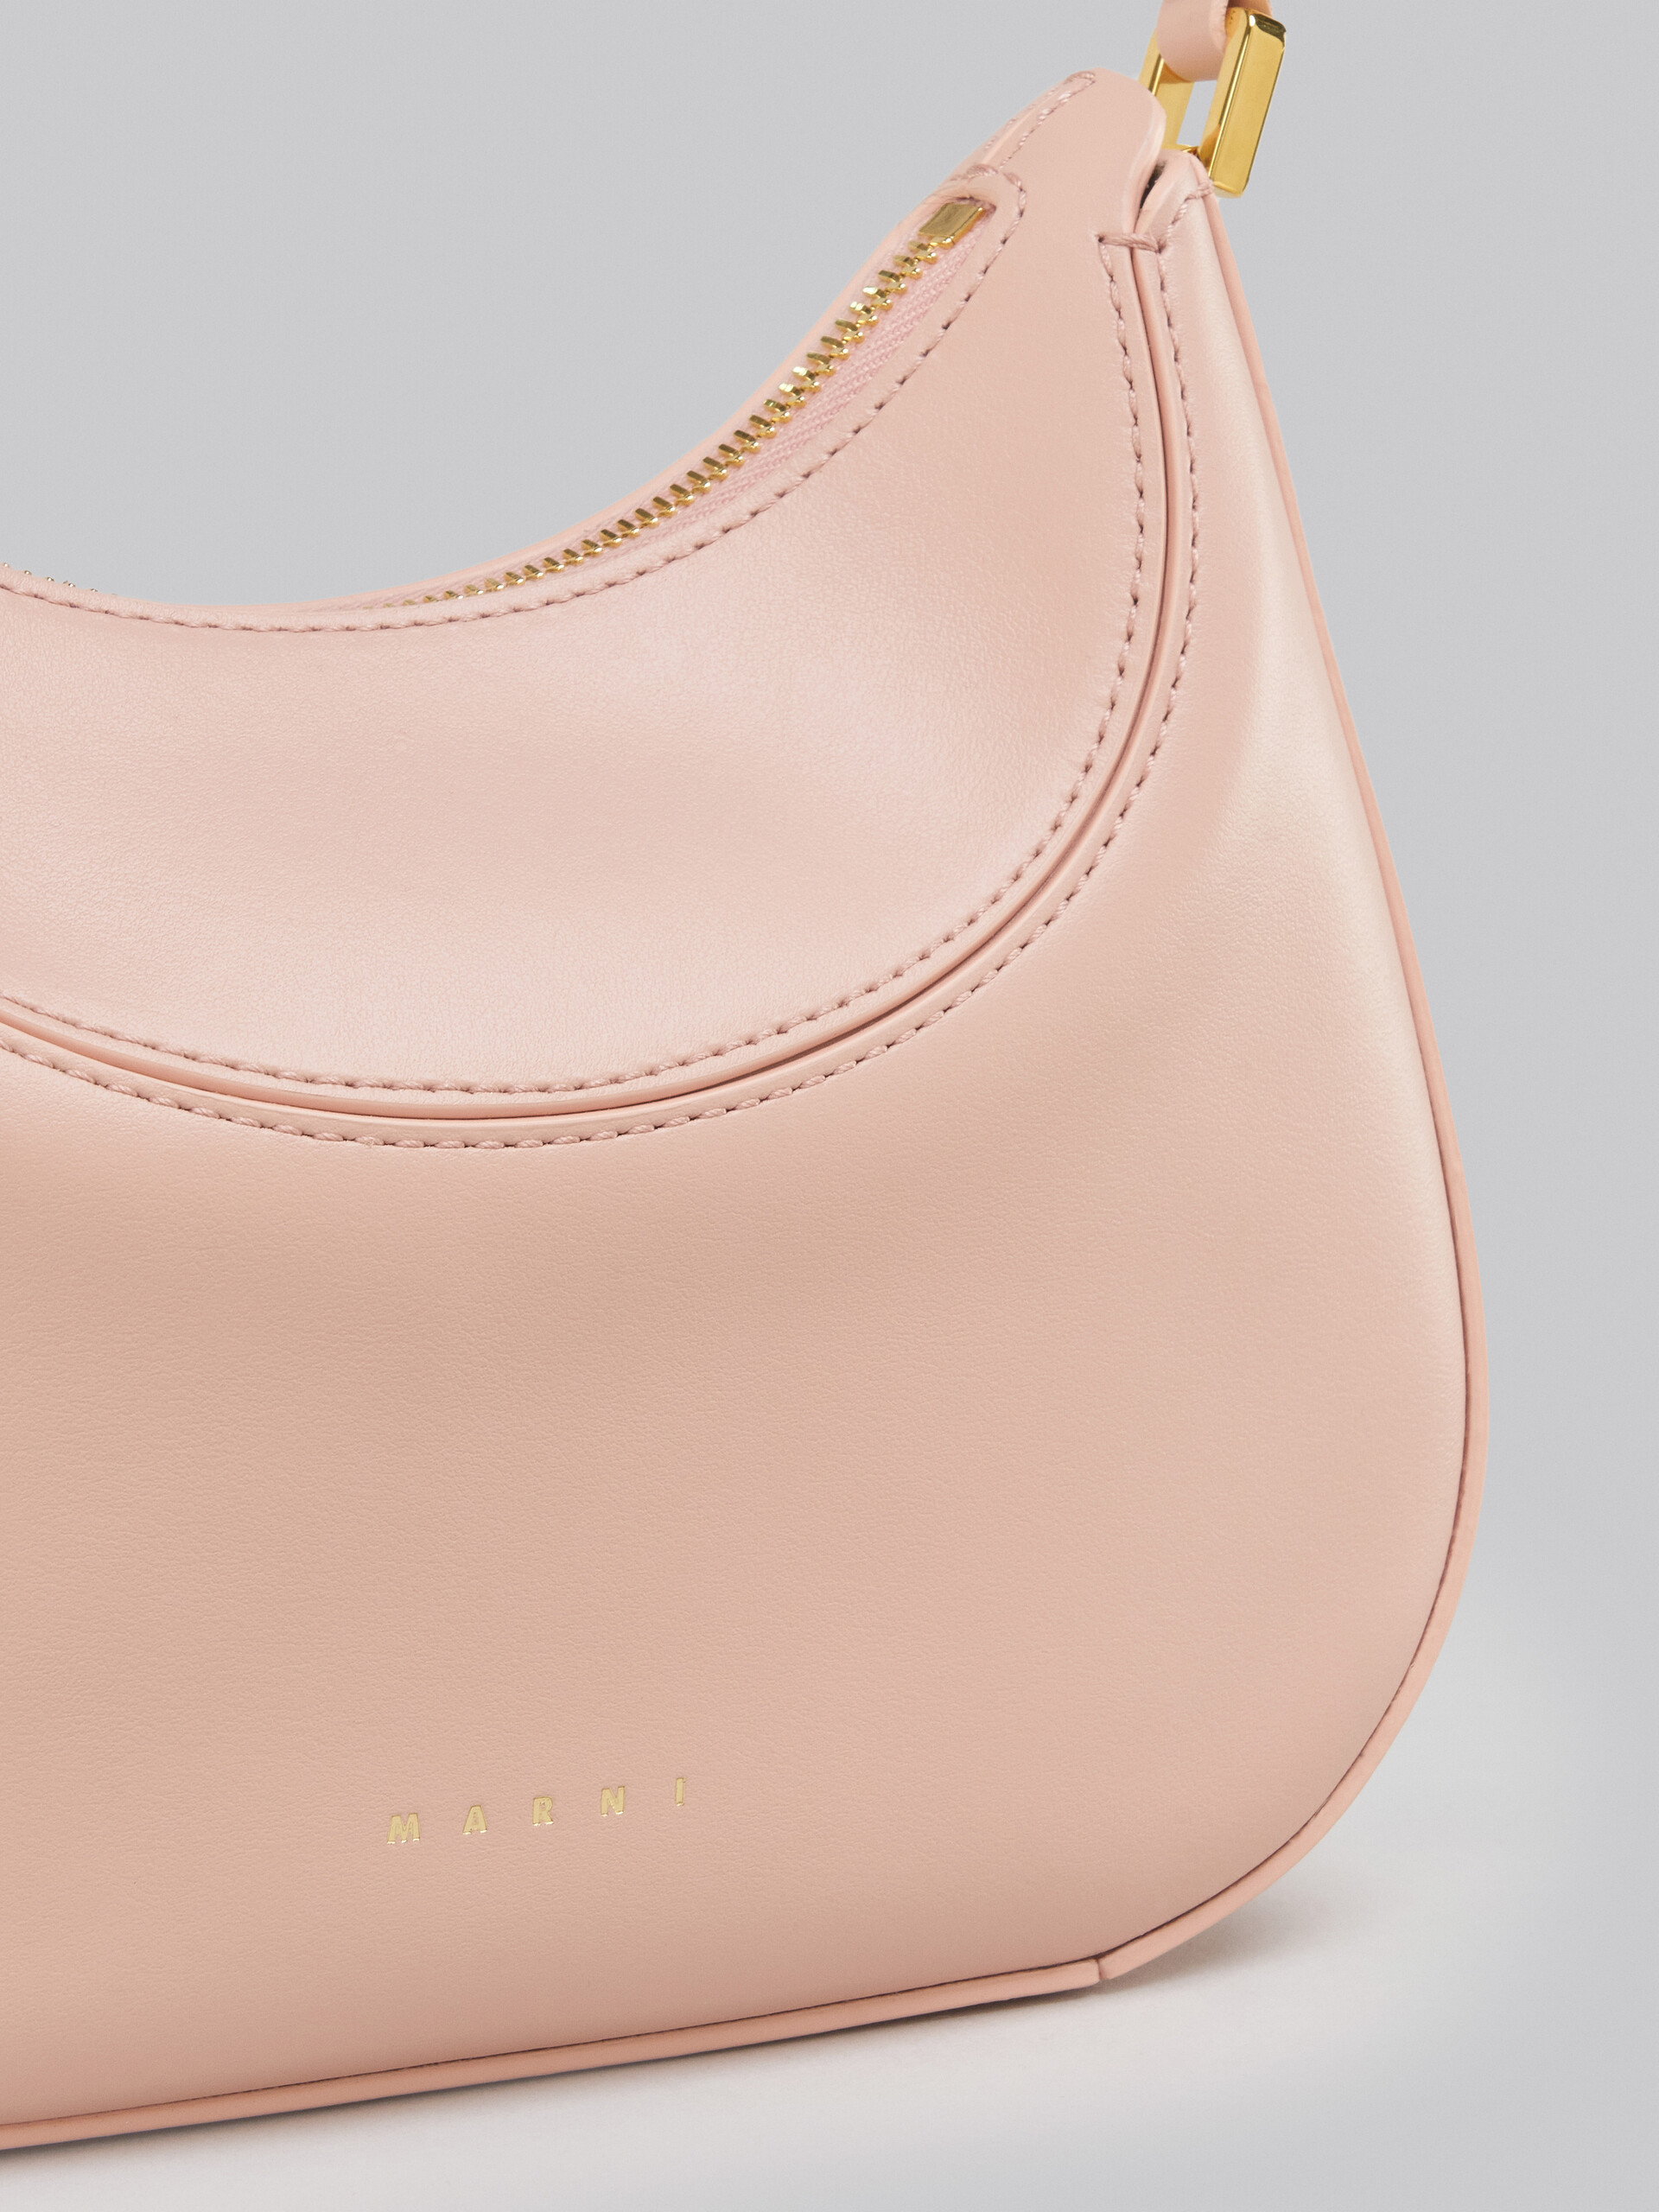 Milano Mini Bag in pink leather - Handbag - Image 4